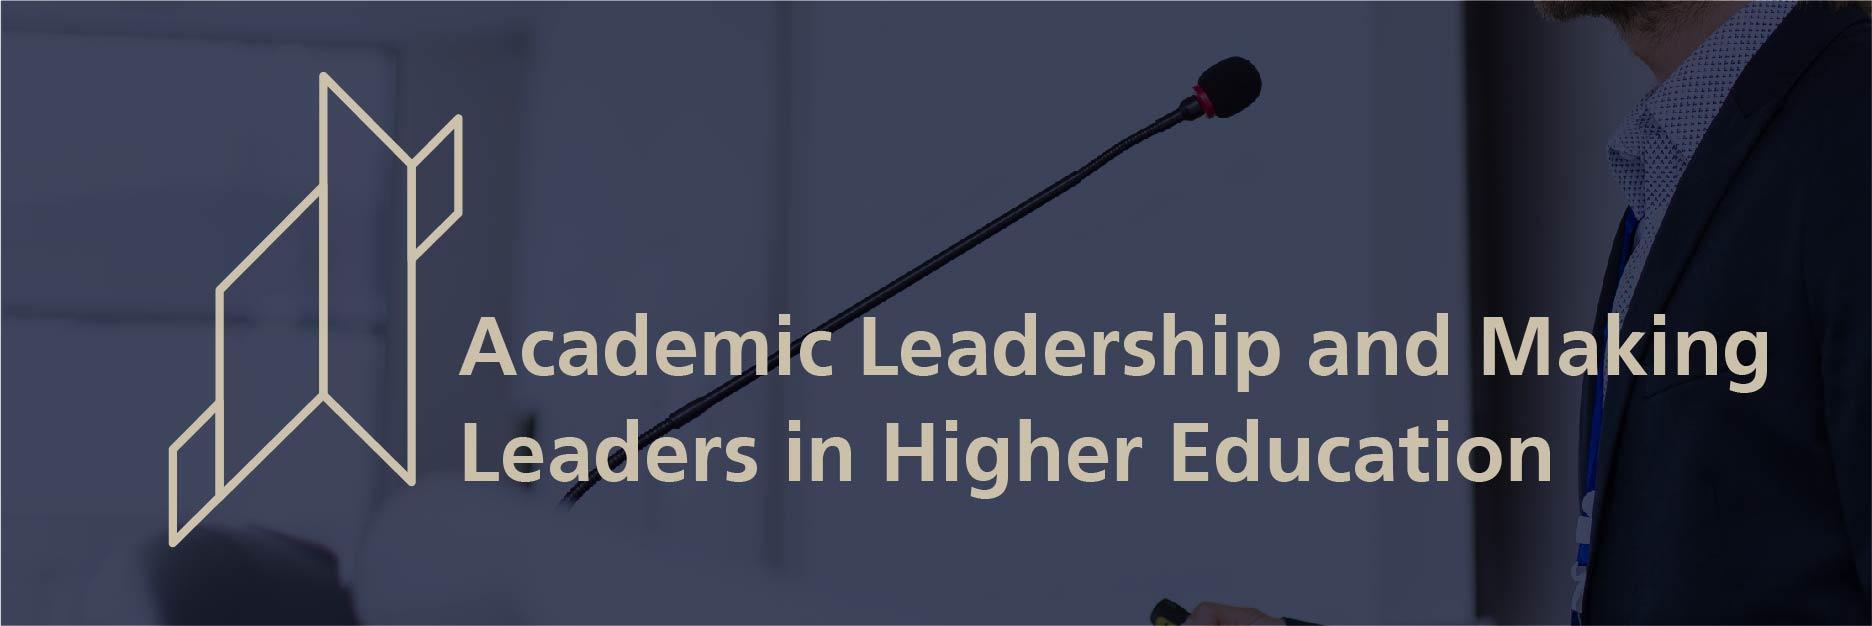 academic leadership and makingleaders in higher education